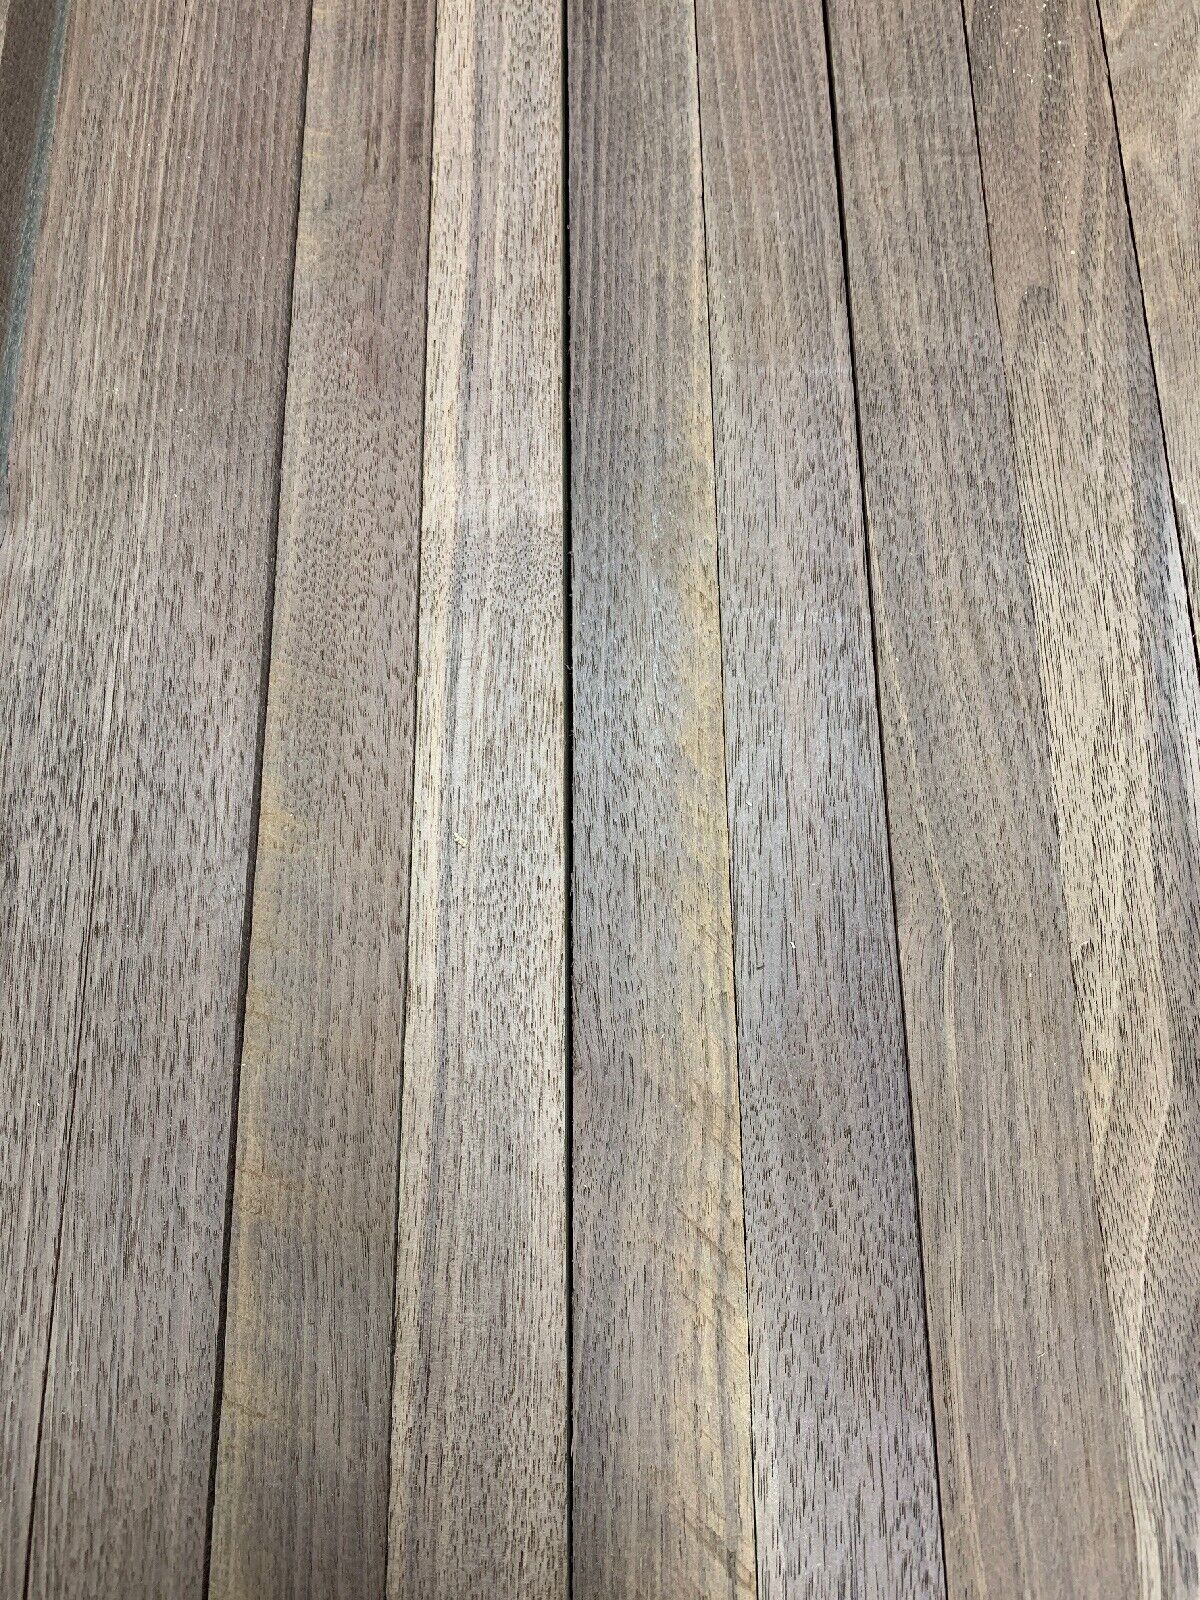 12 Boards, Black Walnut Lumber Dried (1/2” x 2” x 18”) DIY Wood